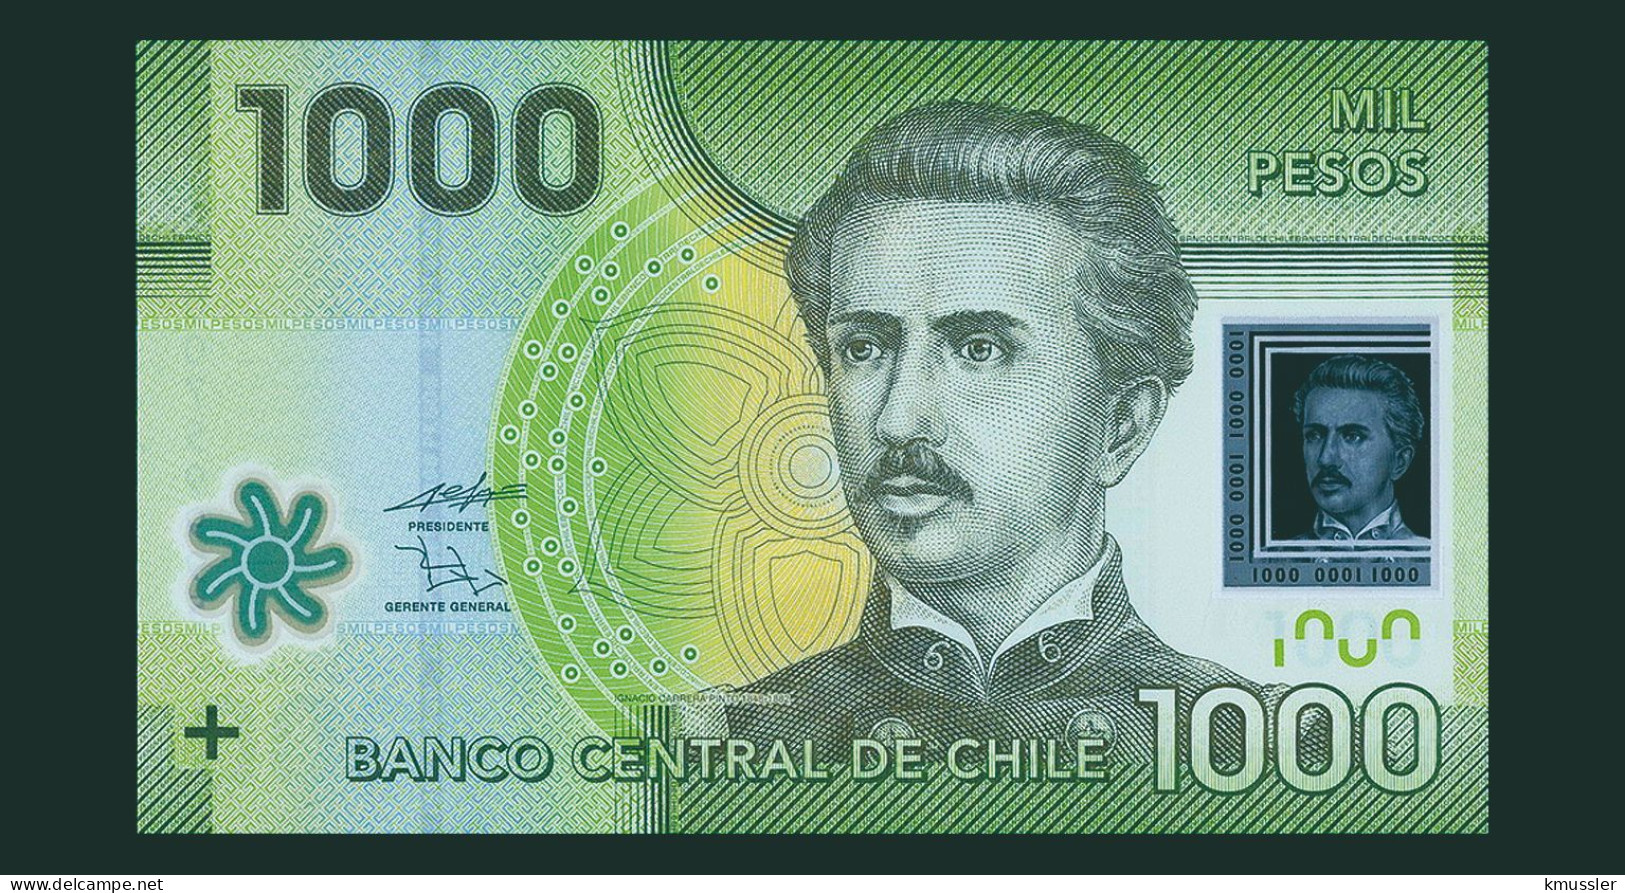 # # # Banknote Aus Chile 1.000 Pesos 2011 (P-161) UNC # # # - Chili